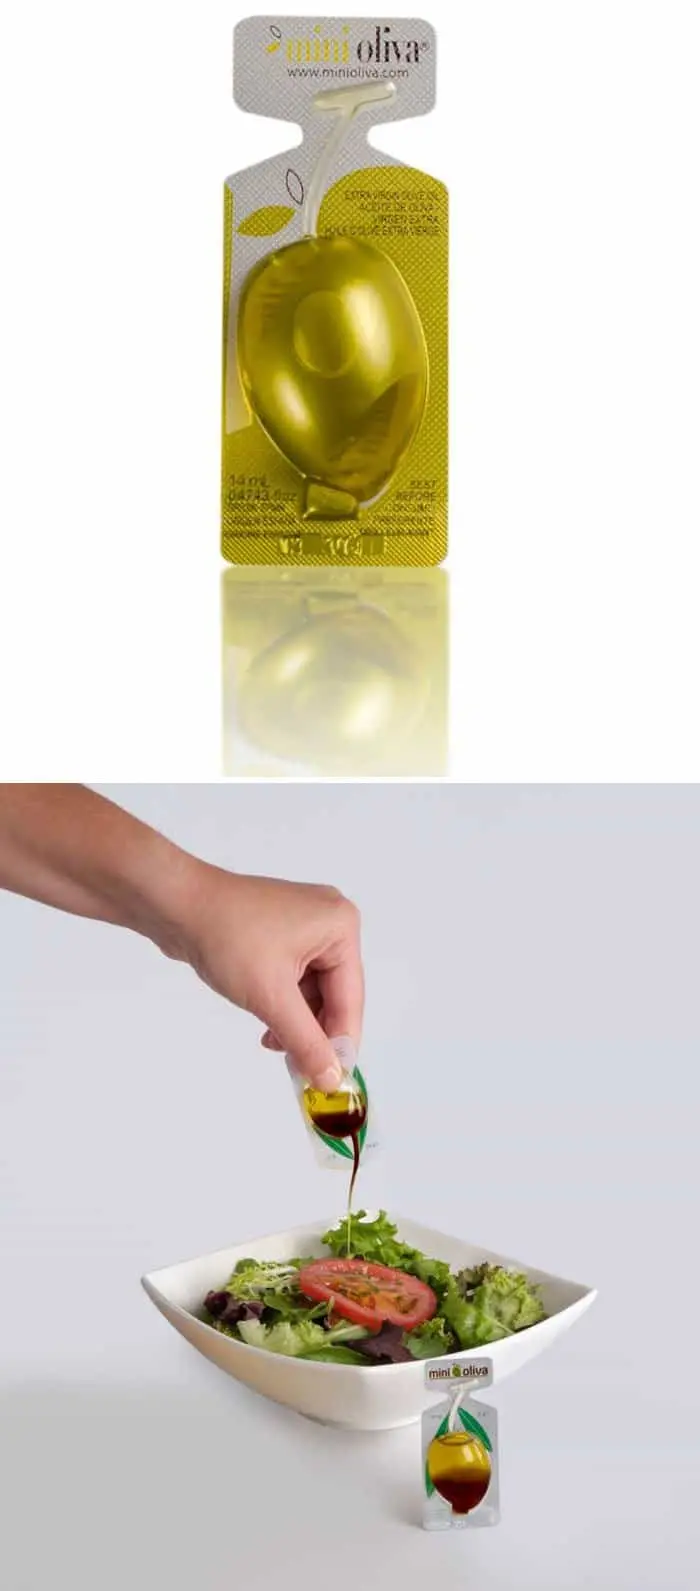 Genius Food Packaging Designs mini olivia olive oil